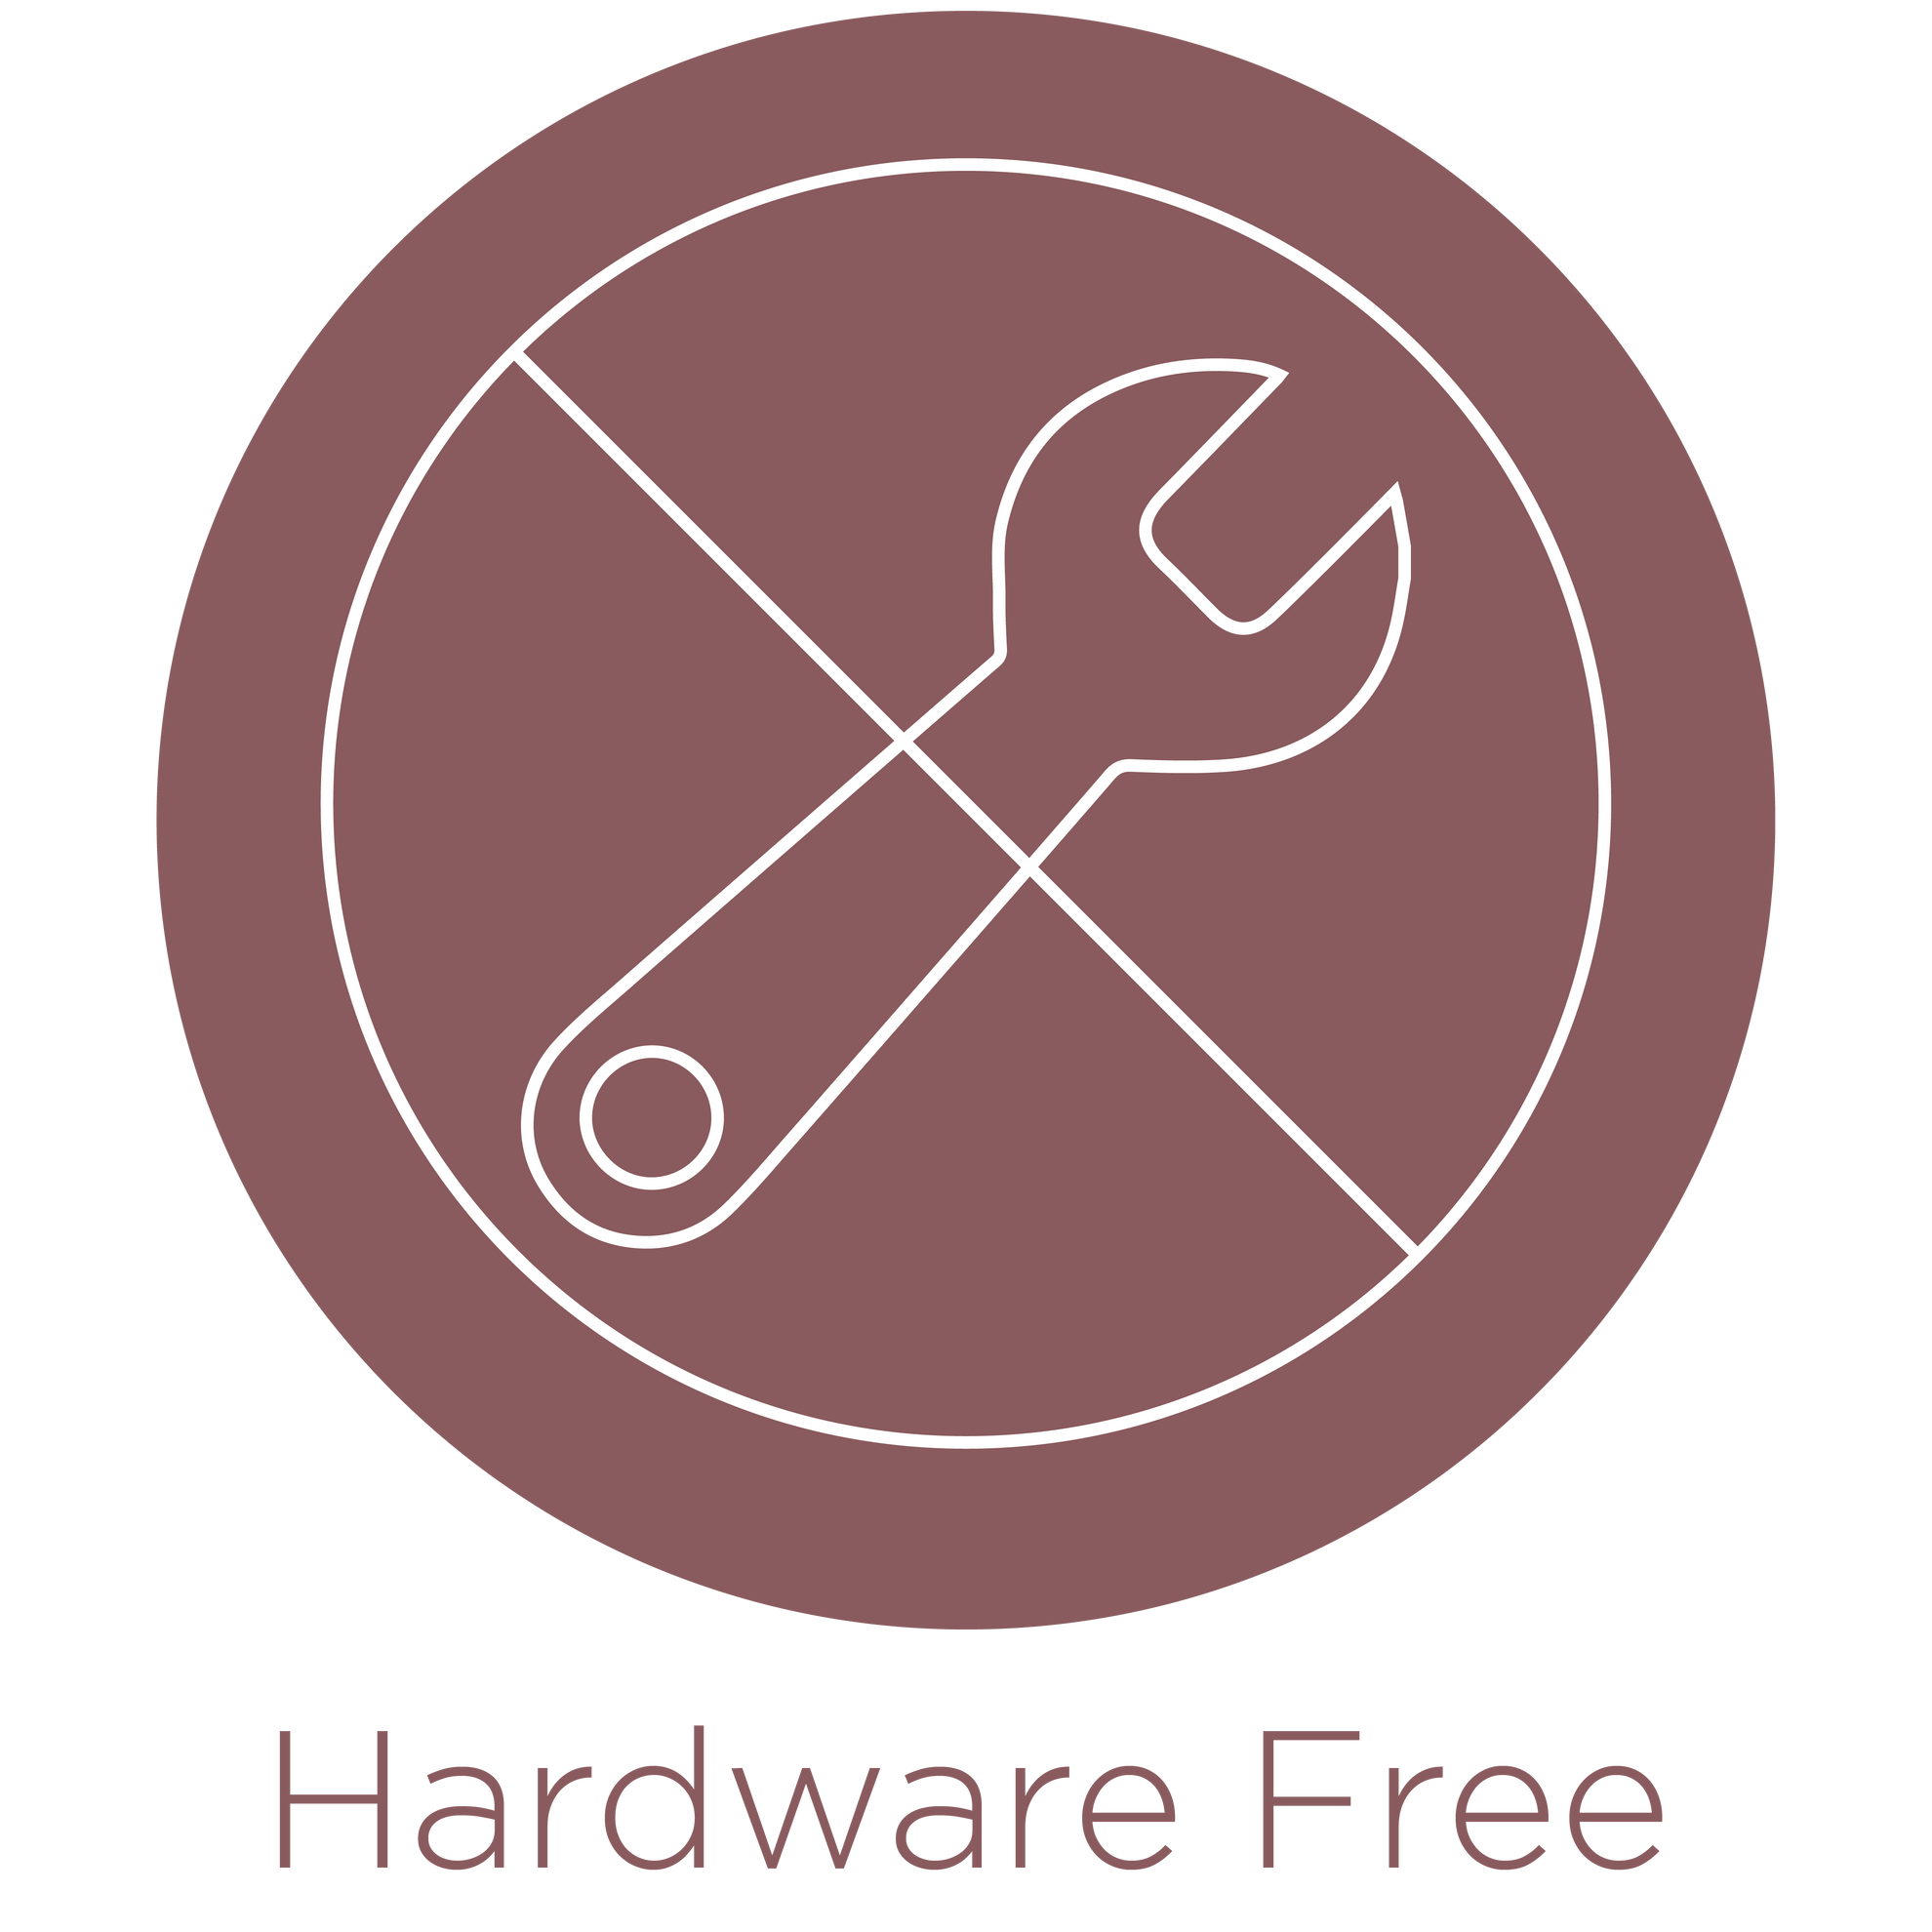 Wrench - hardware free icon